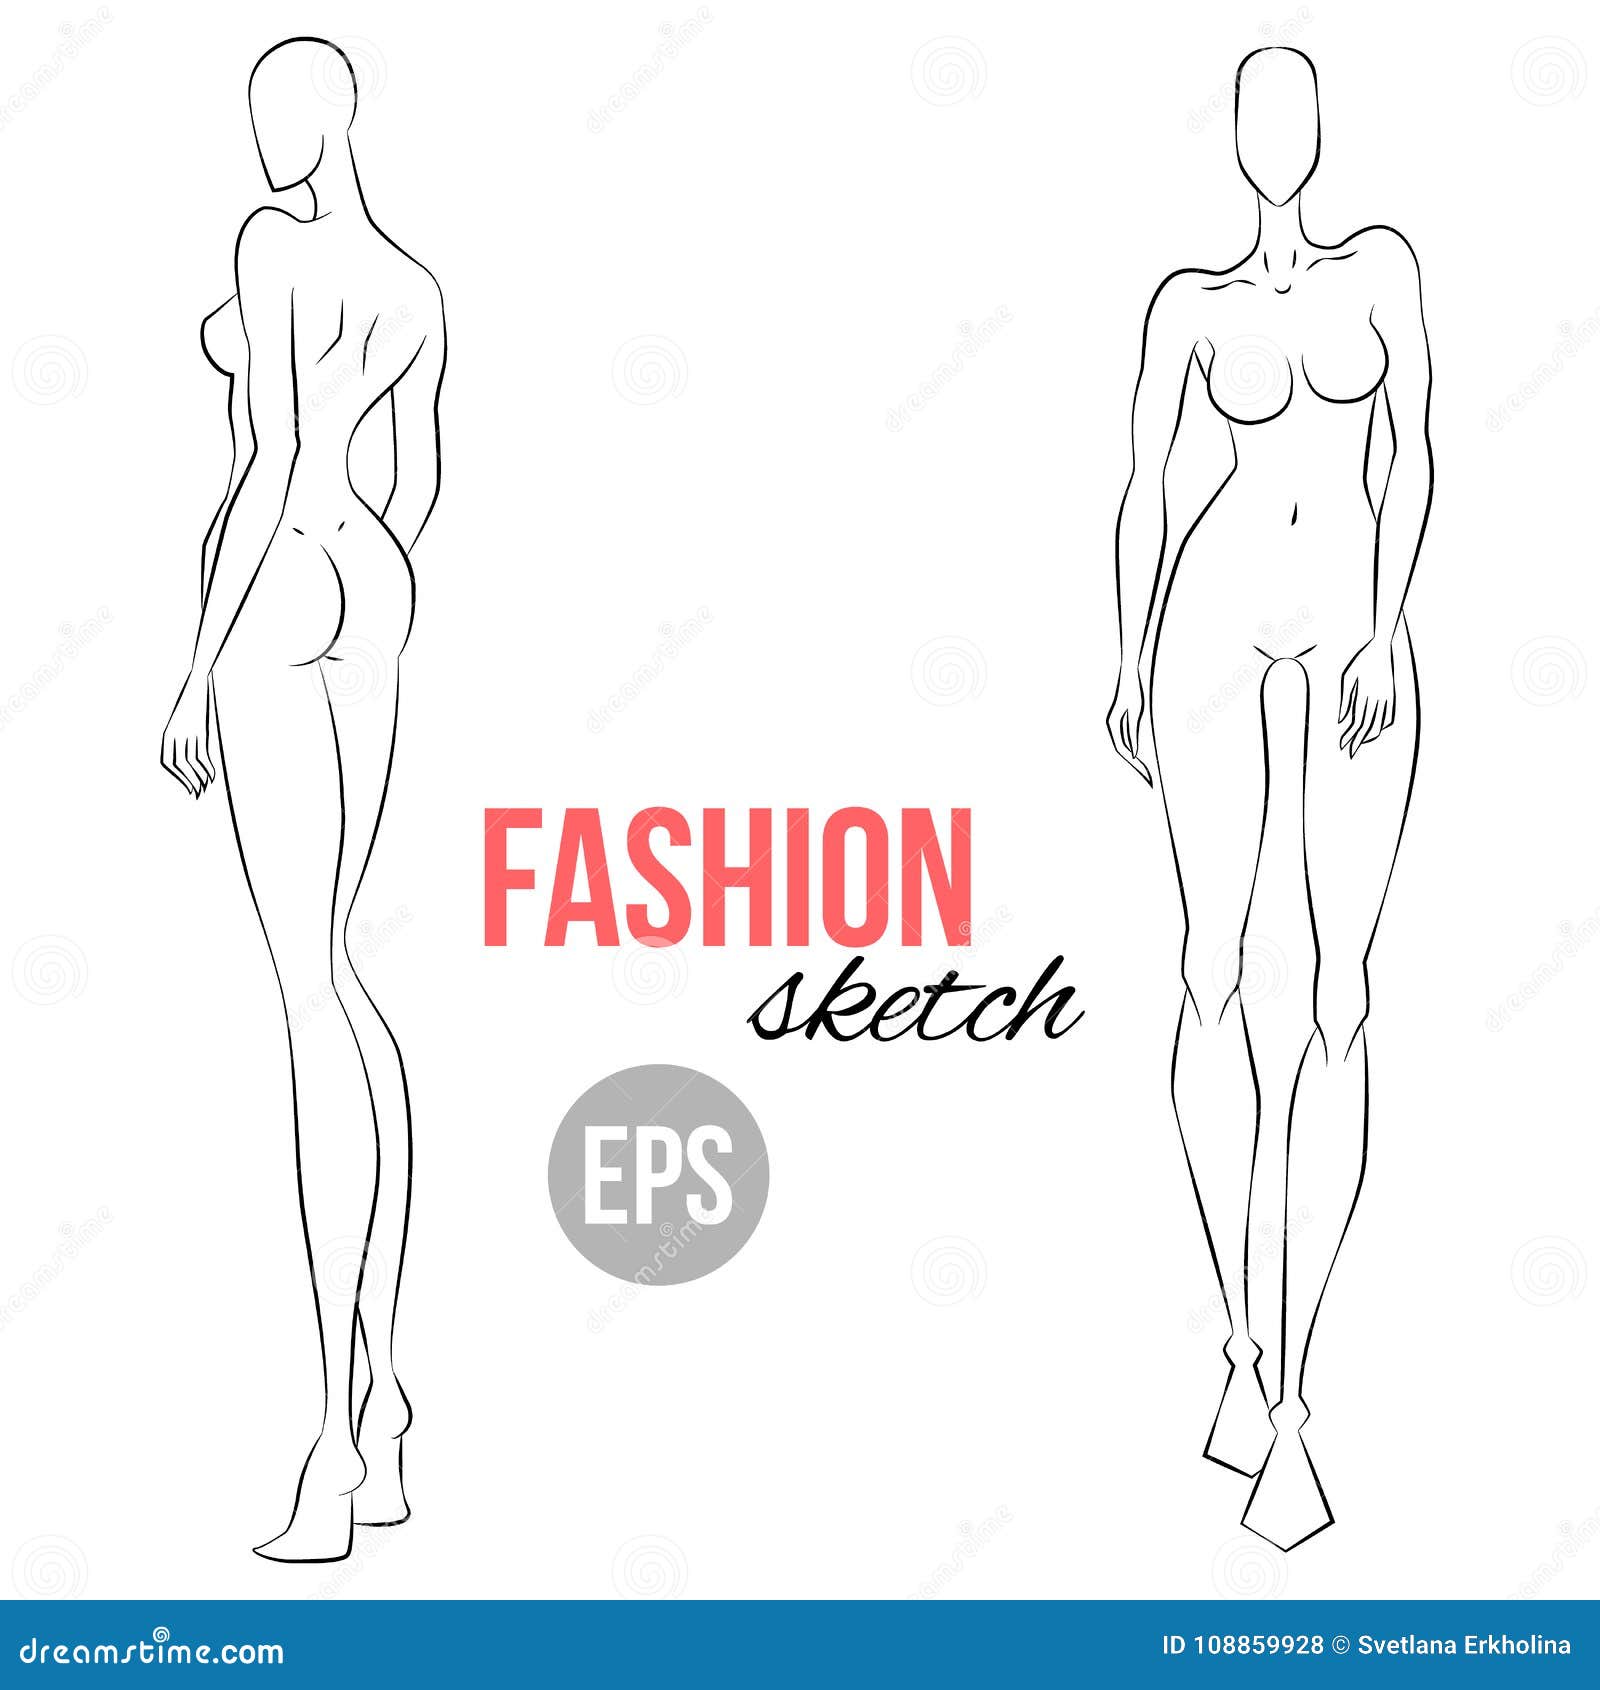 Female Fulld Body Fashion Sketch Graphic by PCYHeartCraft · Creative Fabrica